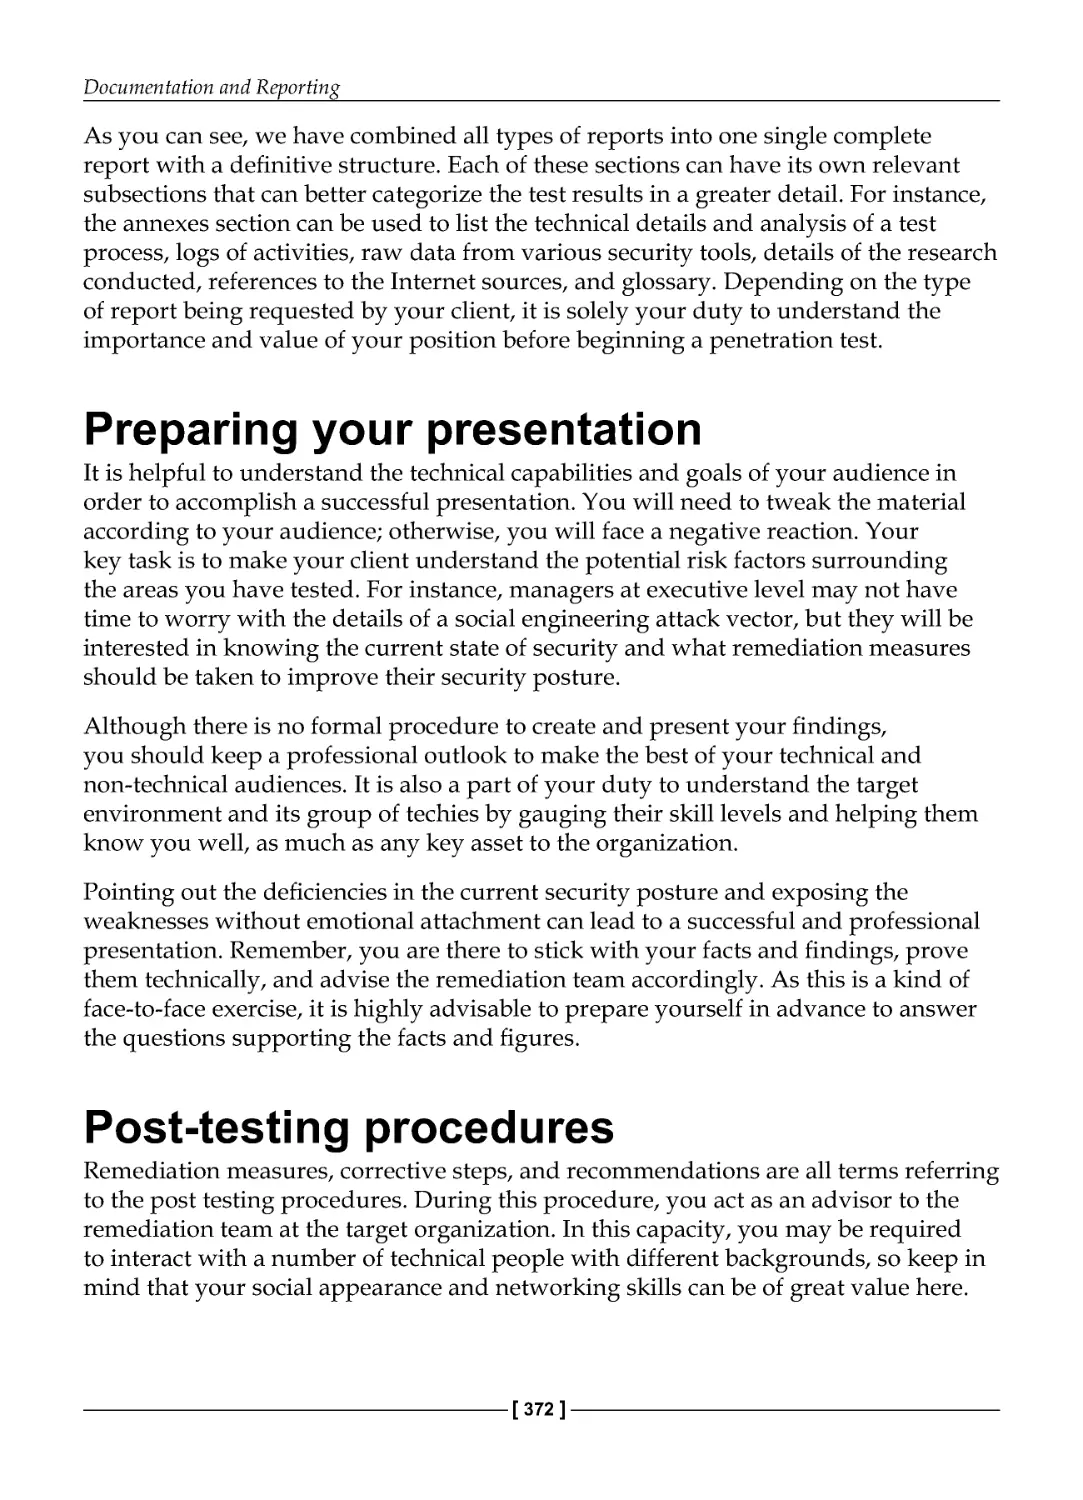 Preparing your presentation
Post-testing procedures